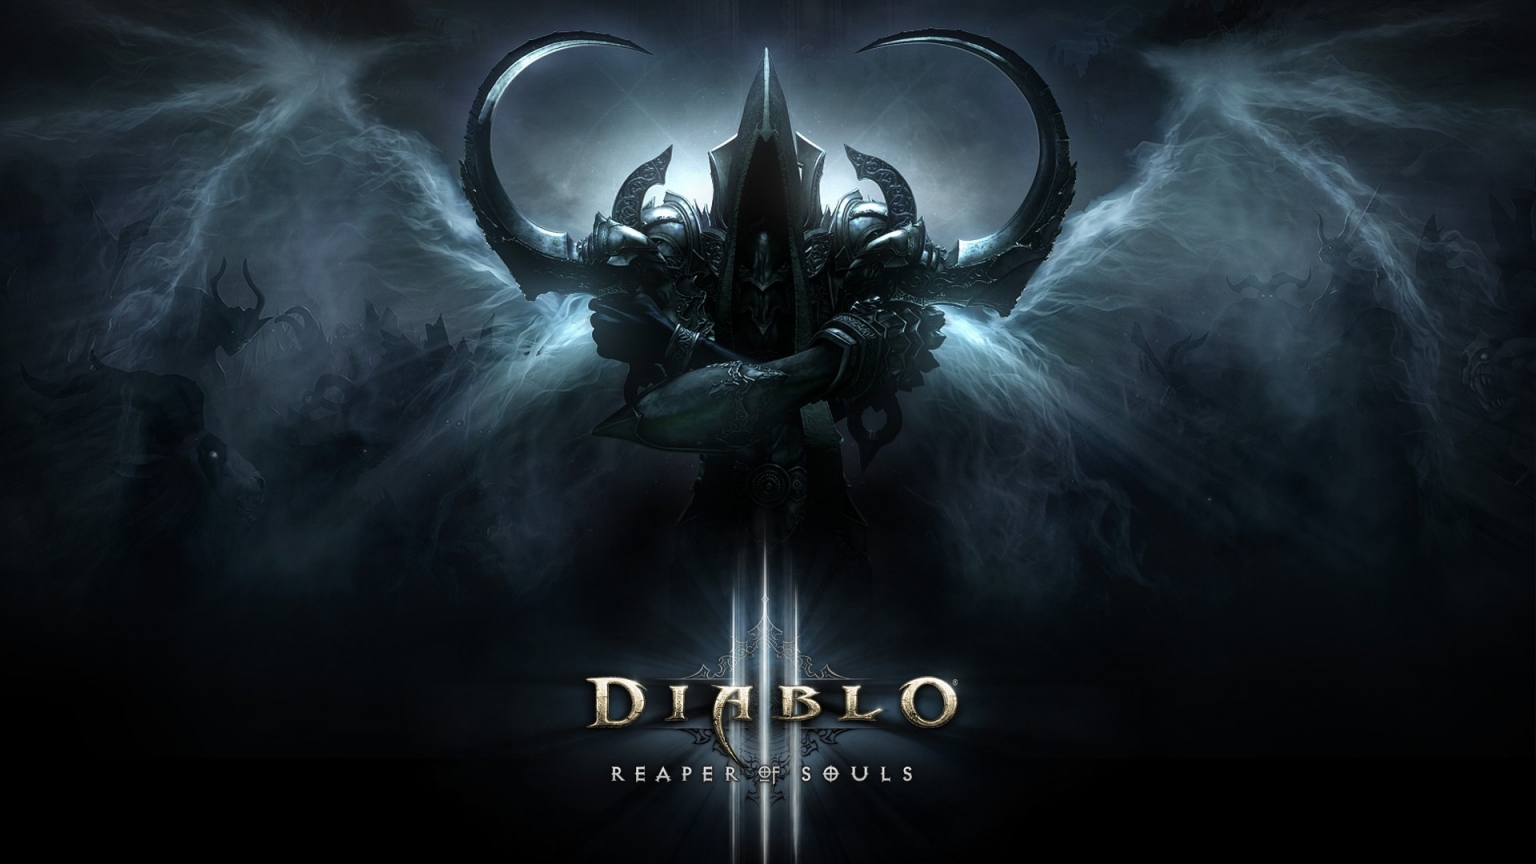 Reaper of Souls Diablo III for 1536 x 864 HDTV resolution